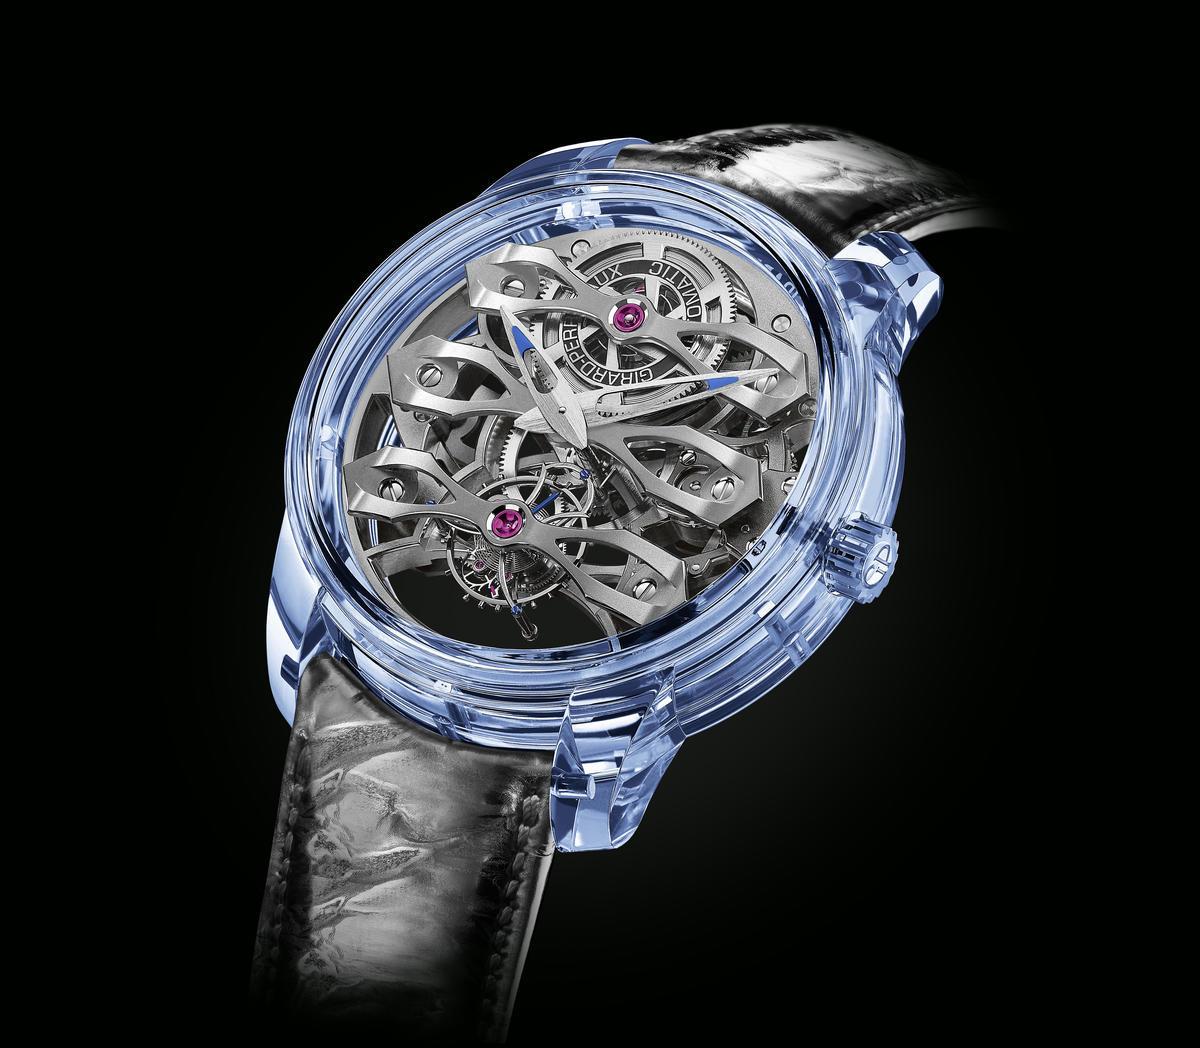 Made from a single block of blue sapphire the $274,000 Girard-Perregaux Quasar Azure watch is an absolute work of art